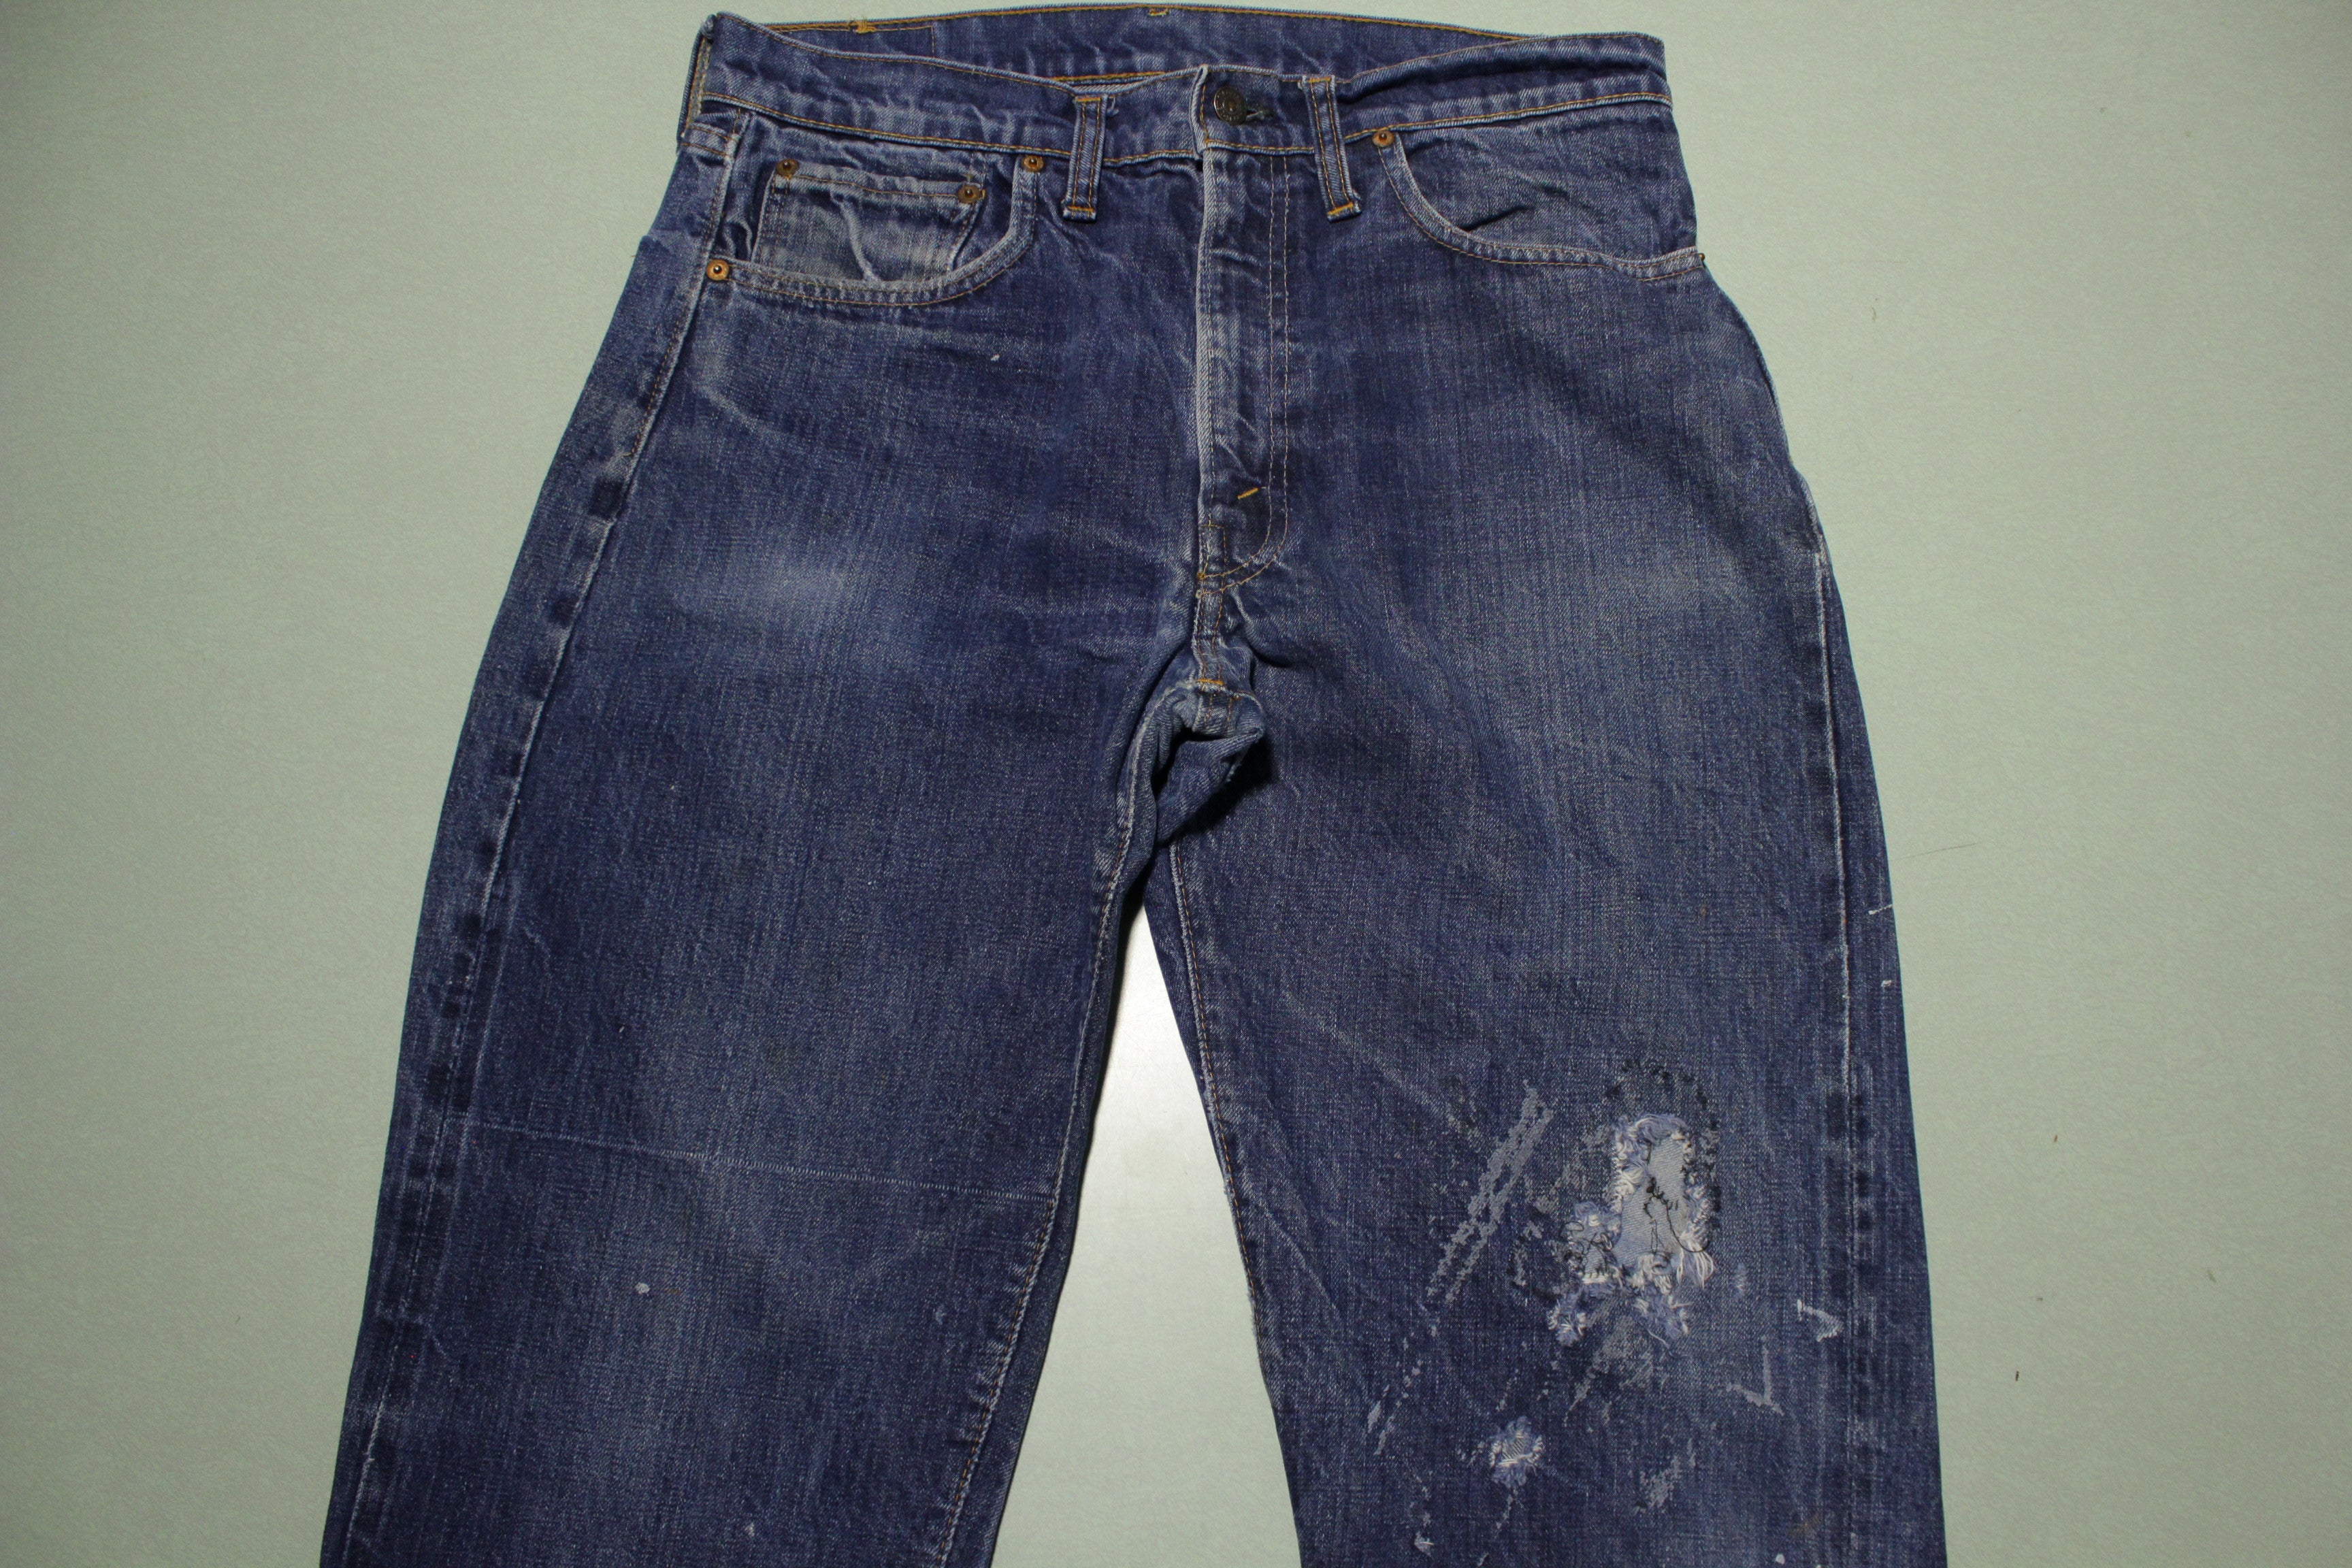 Levis 505-0217 Vintage Big E 60s Selvedge Denim Jeans 505 Made in